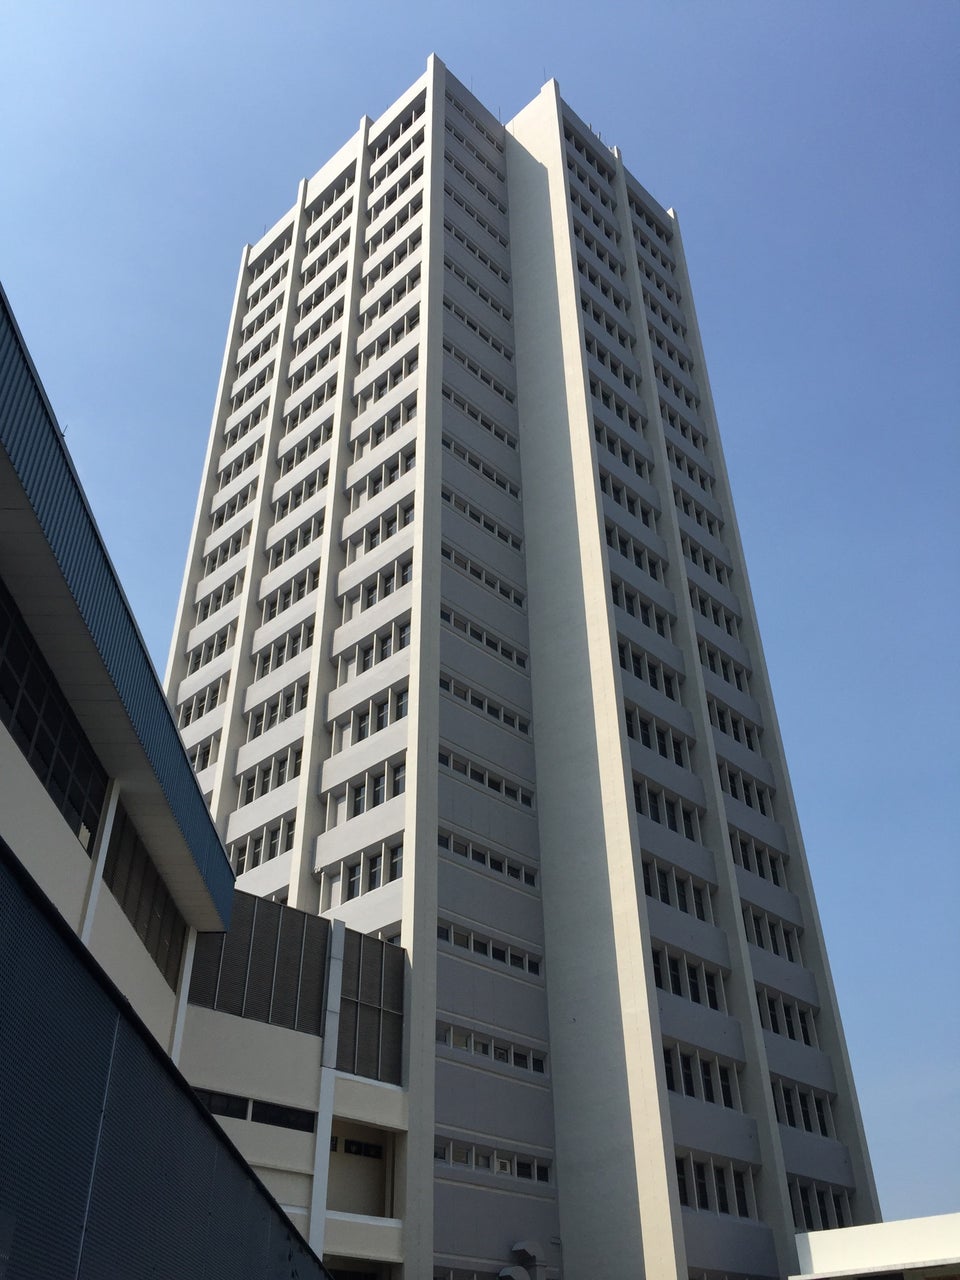 Tanjong Pagar Complex Building - Singapore Office